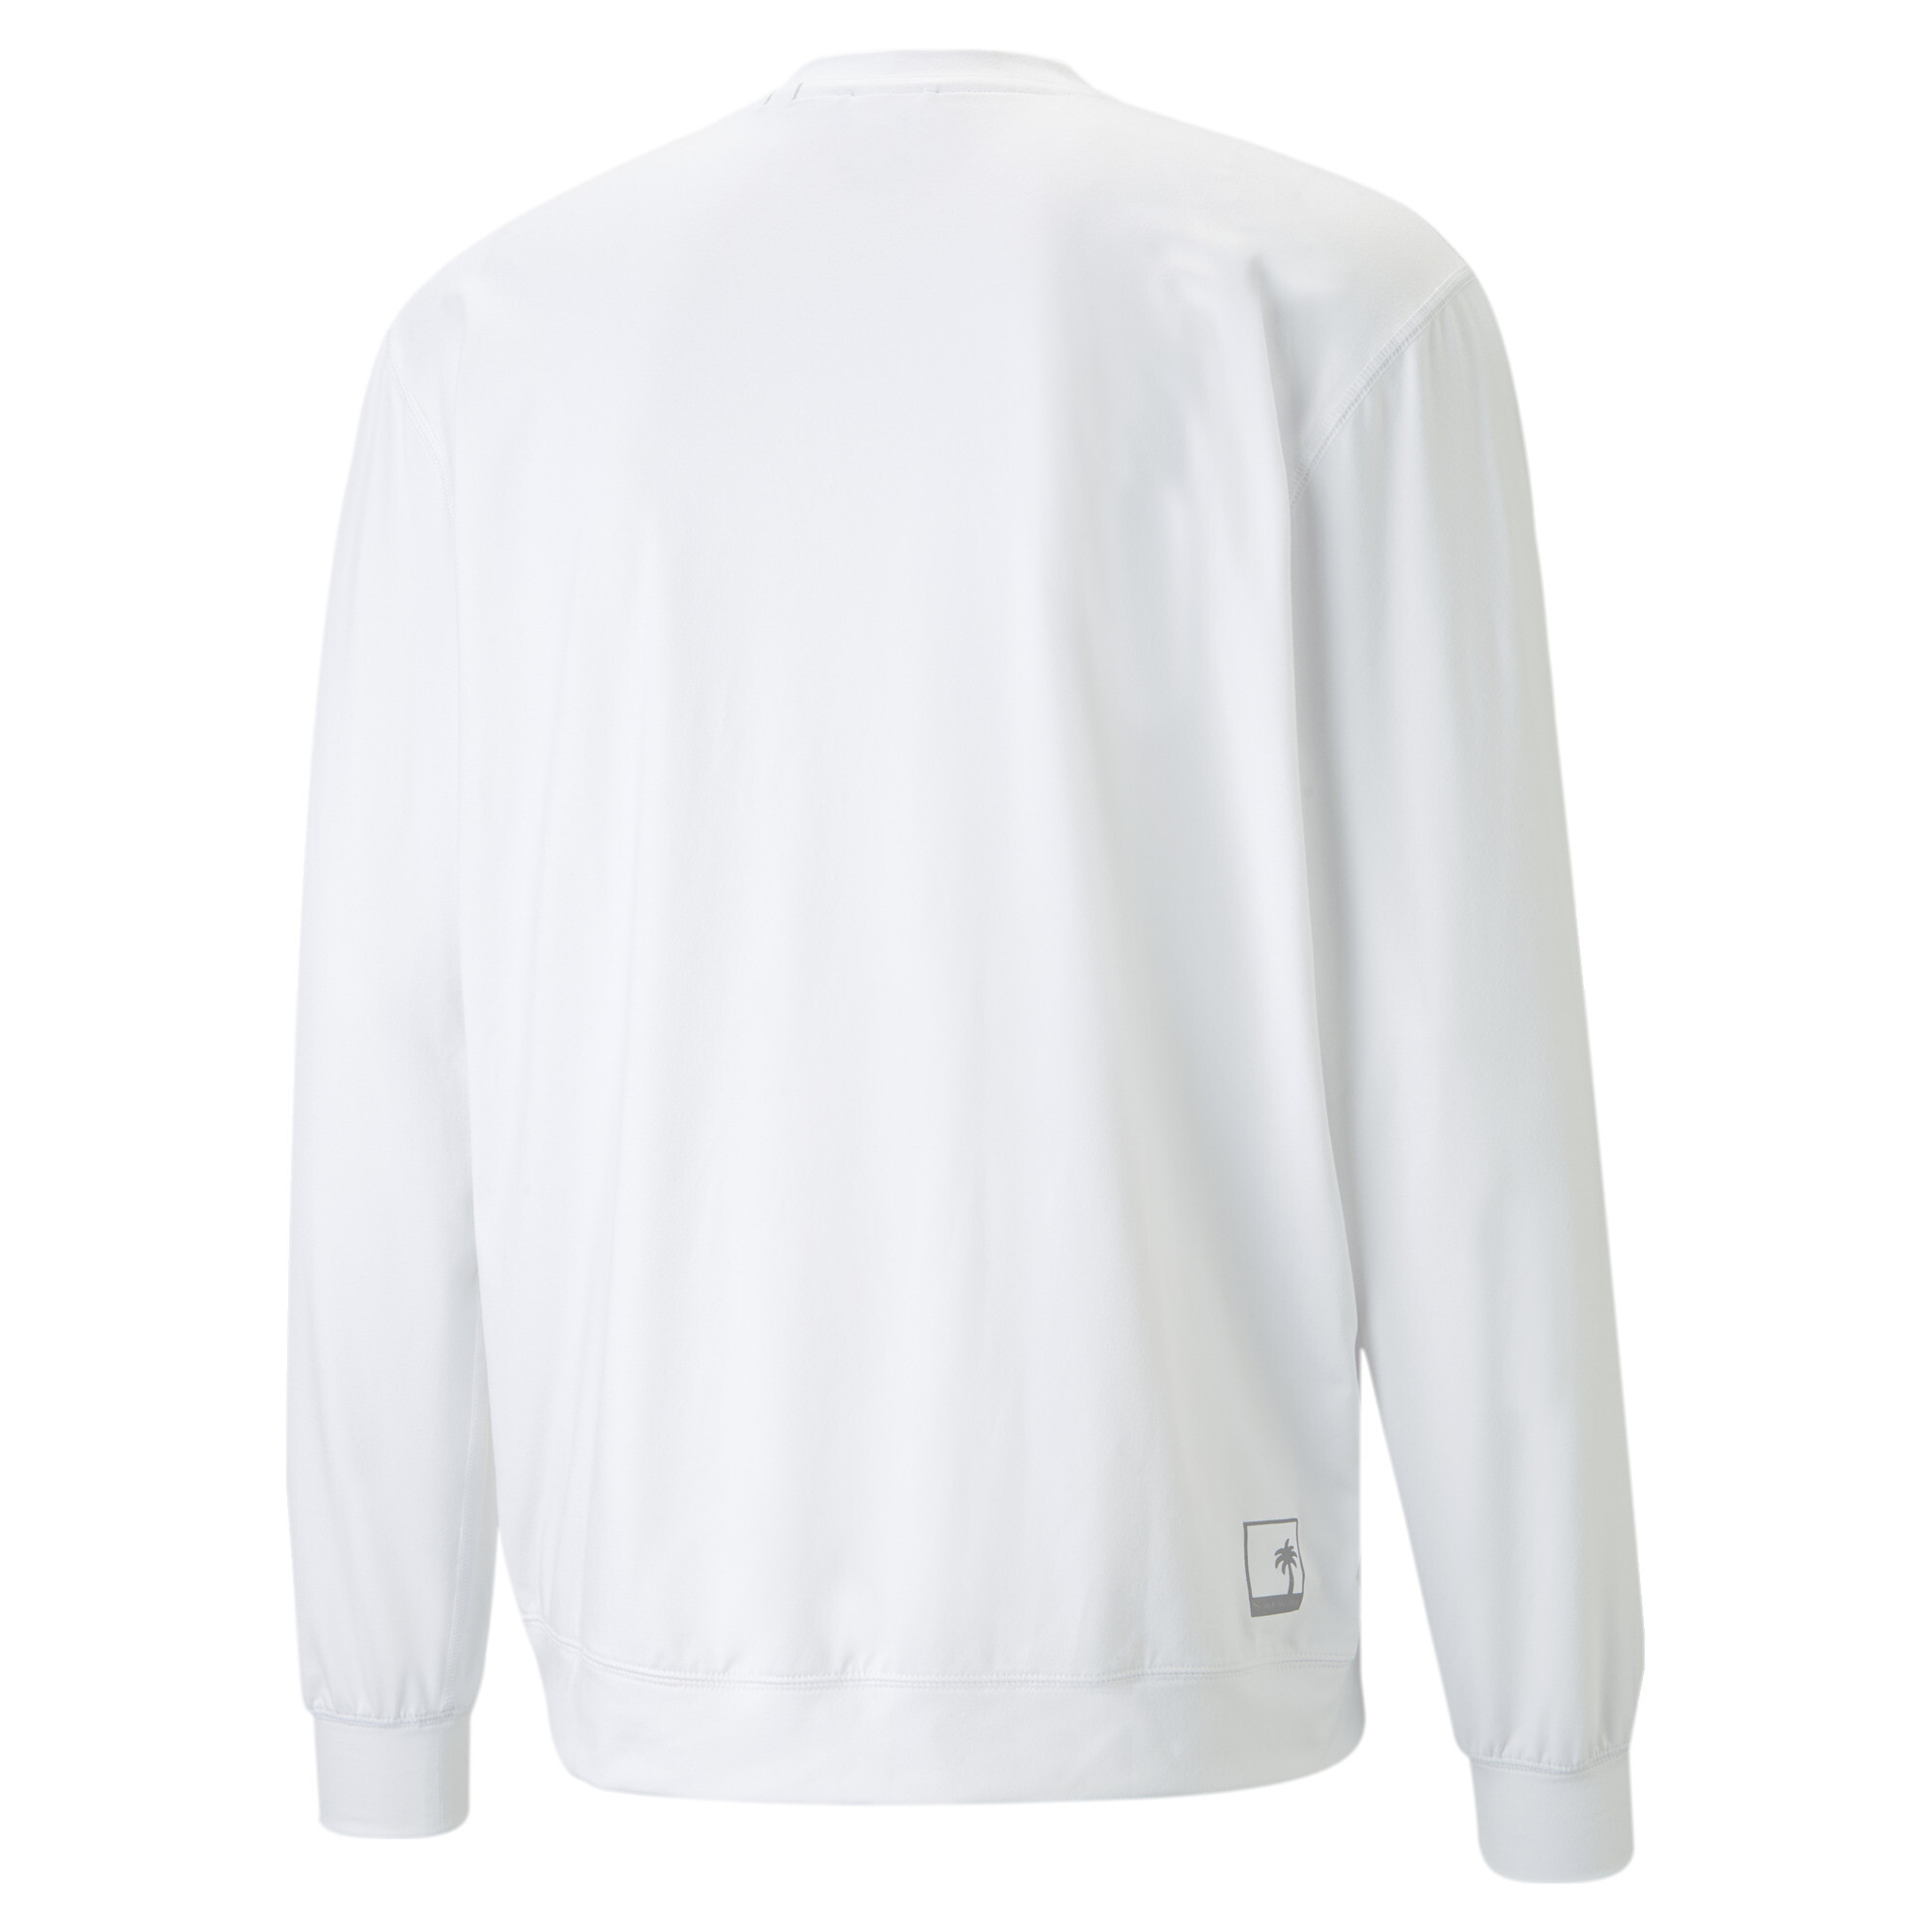 Men's Puma X Palm Tree Crew Golf Crew Neck Sweatshirt, White Sweatshirt, Size XL Sweatshirt, Clothing